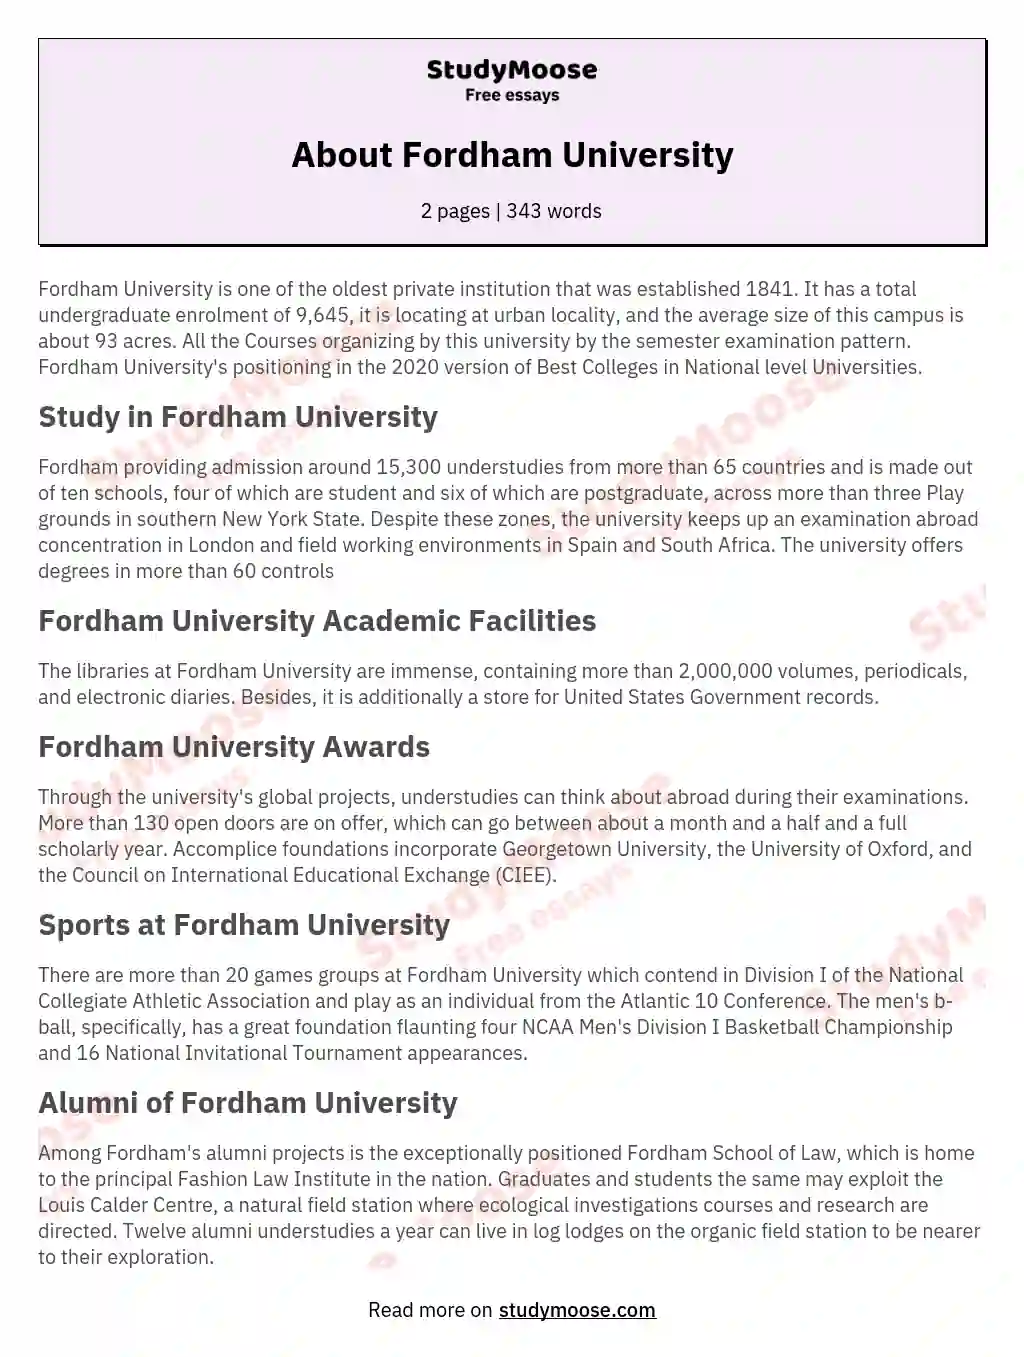 About Fordham University essay